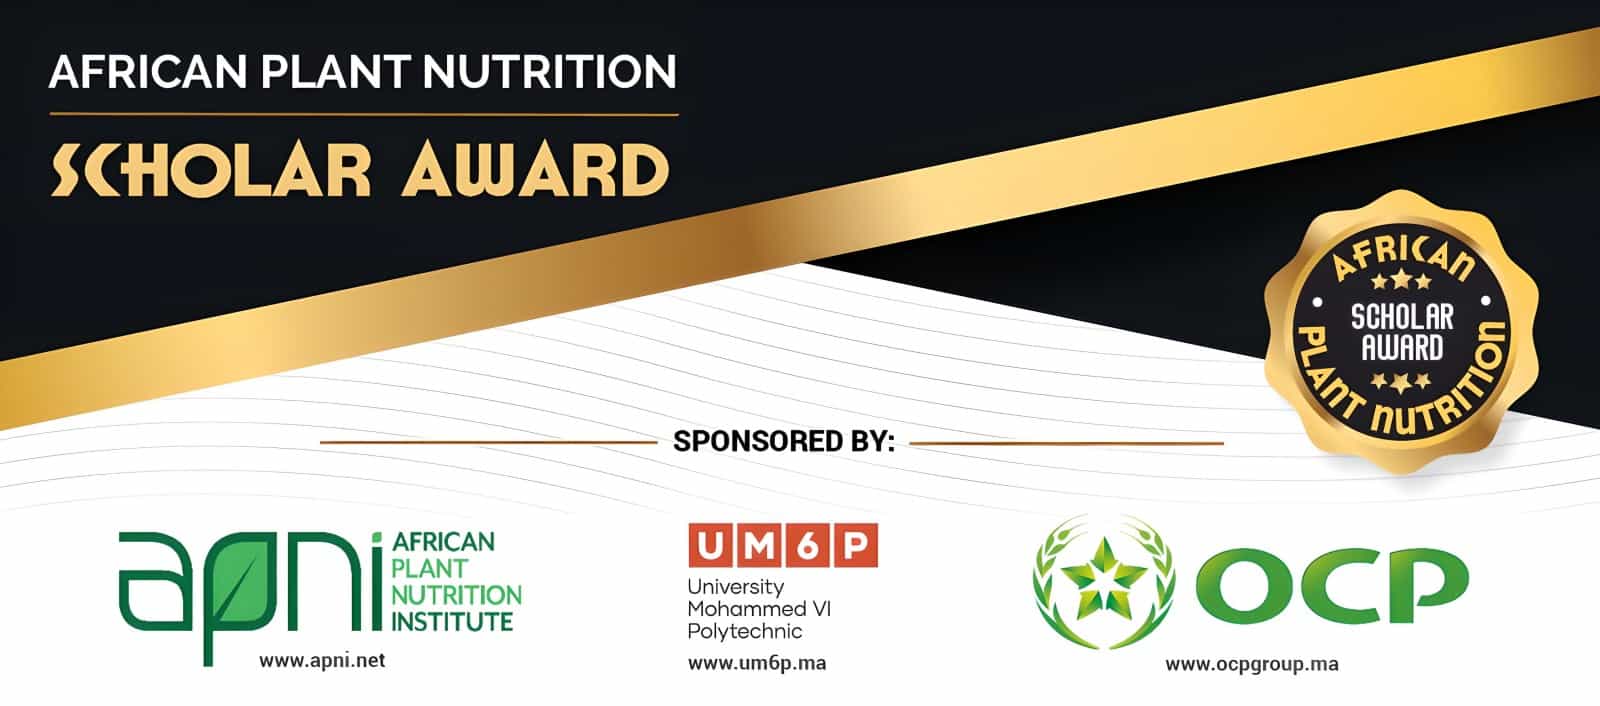 African Plant Nutrition Institute (APNI) Scholar Award Program